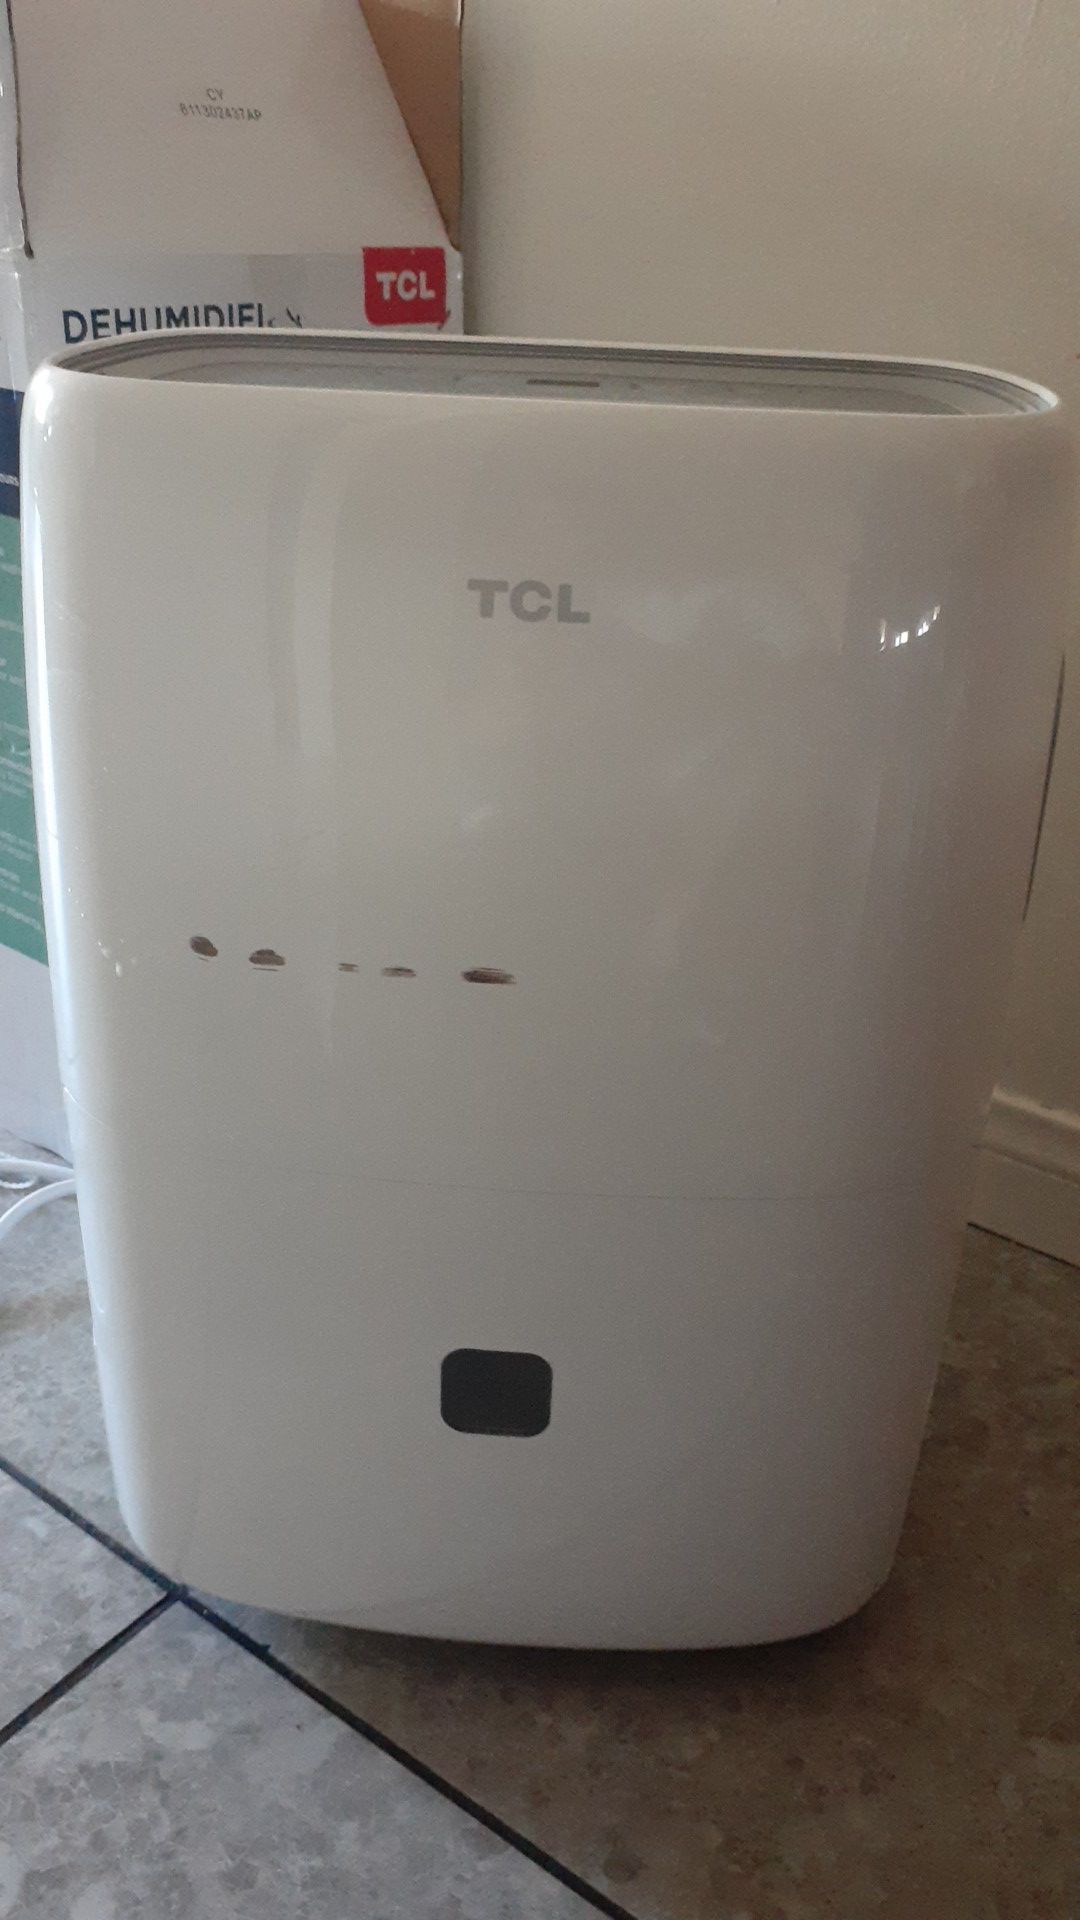 TCL Dehumidifier with warranty